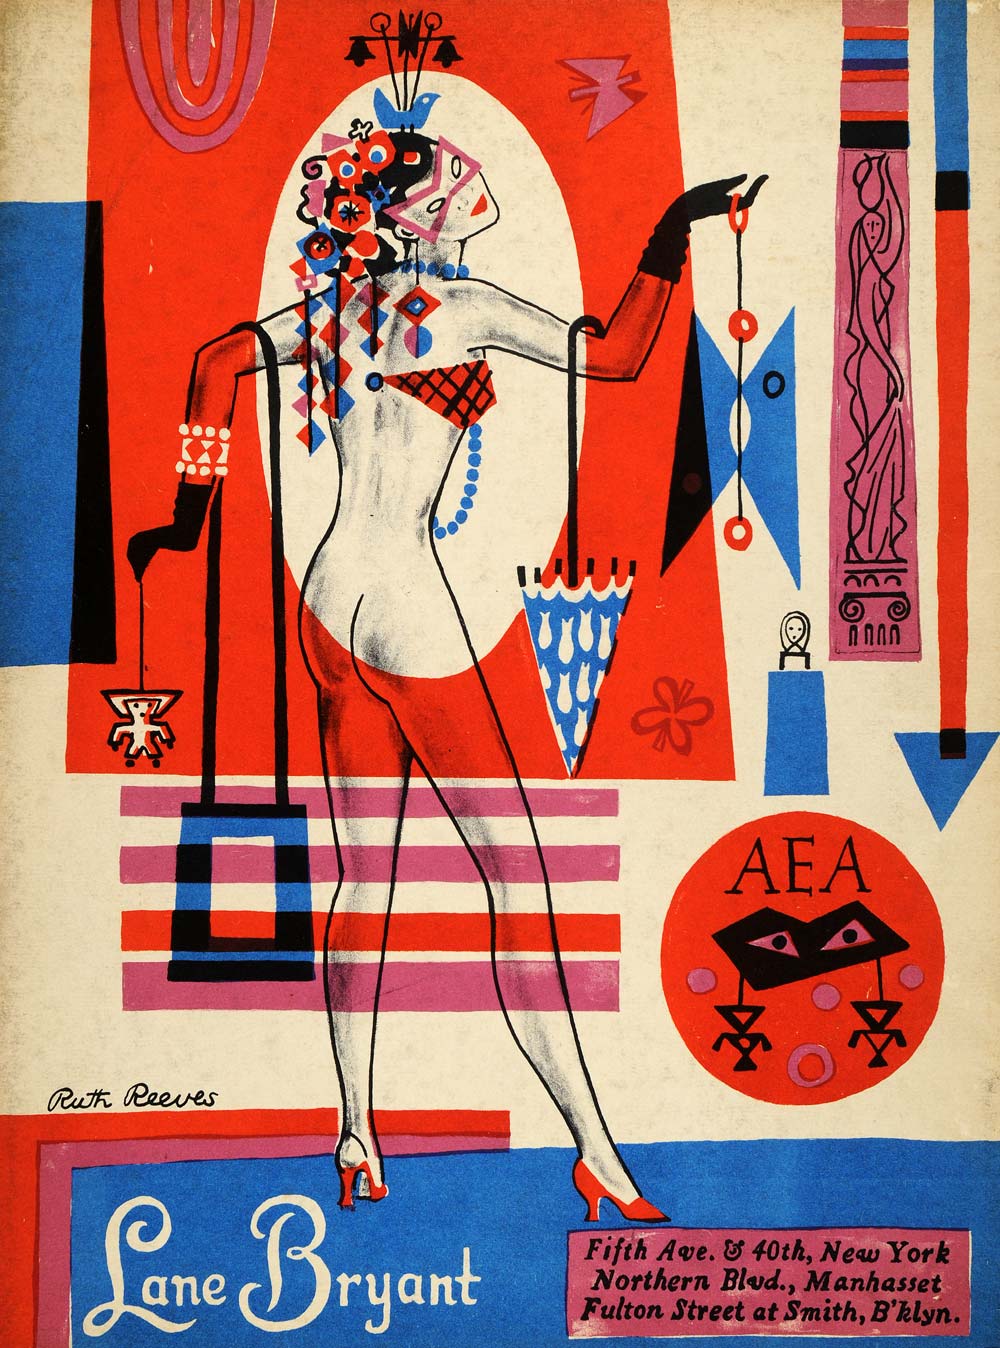 1954 Original Lithograph Ruth Reeves Nude Woman Art Lane Bryant Fashion AEF4